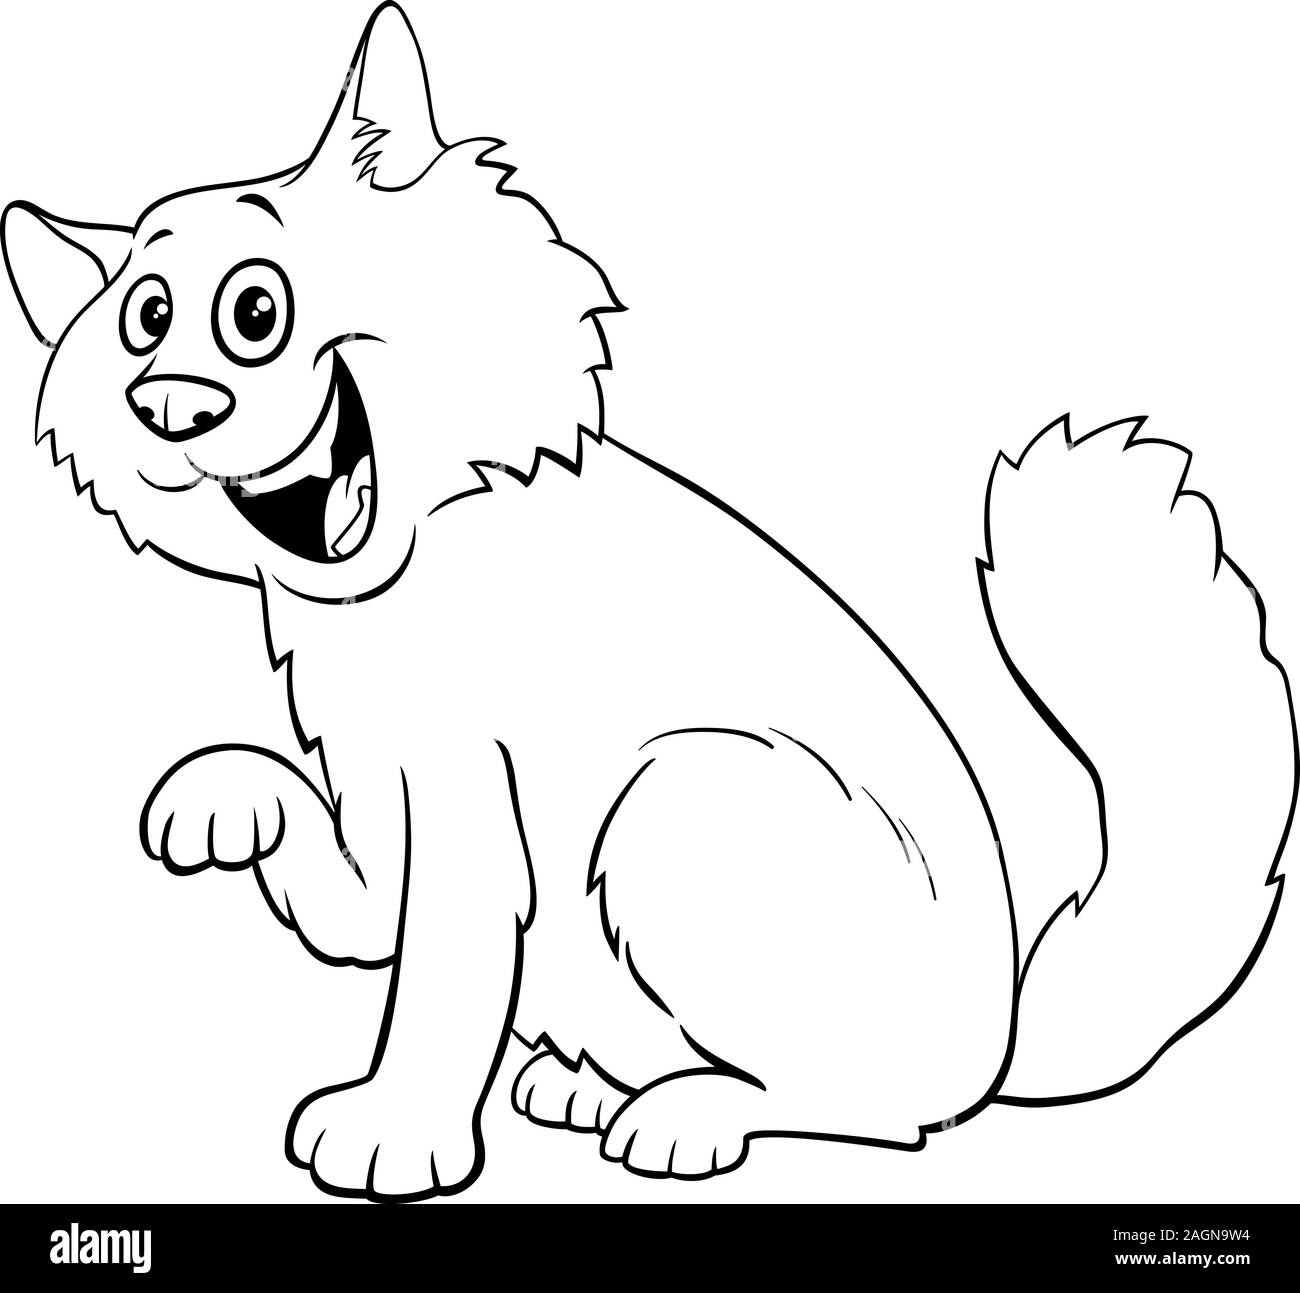 Gatitos de dibujos animados Imágenes recortadas de stock - Página 3 - Alamy